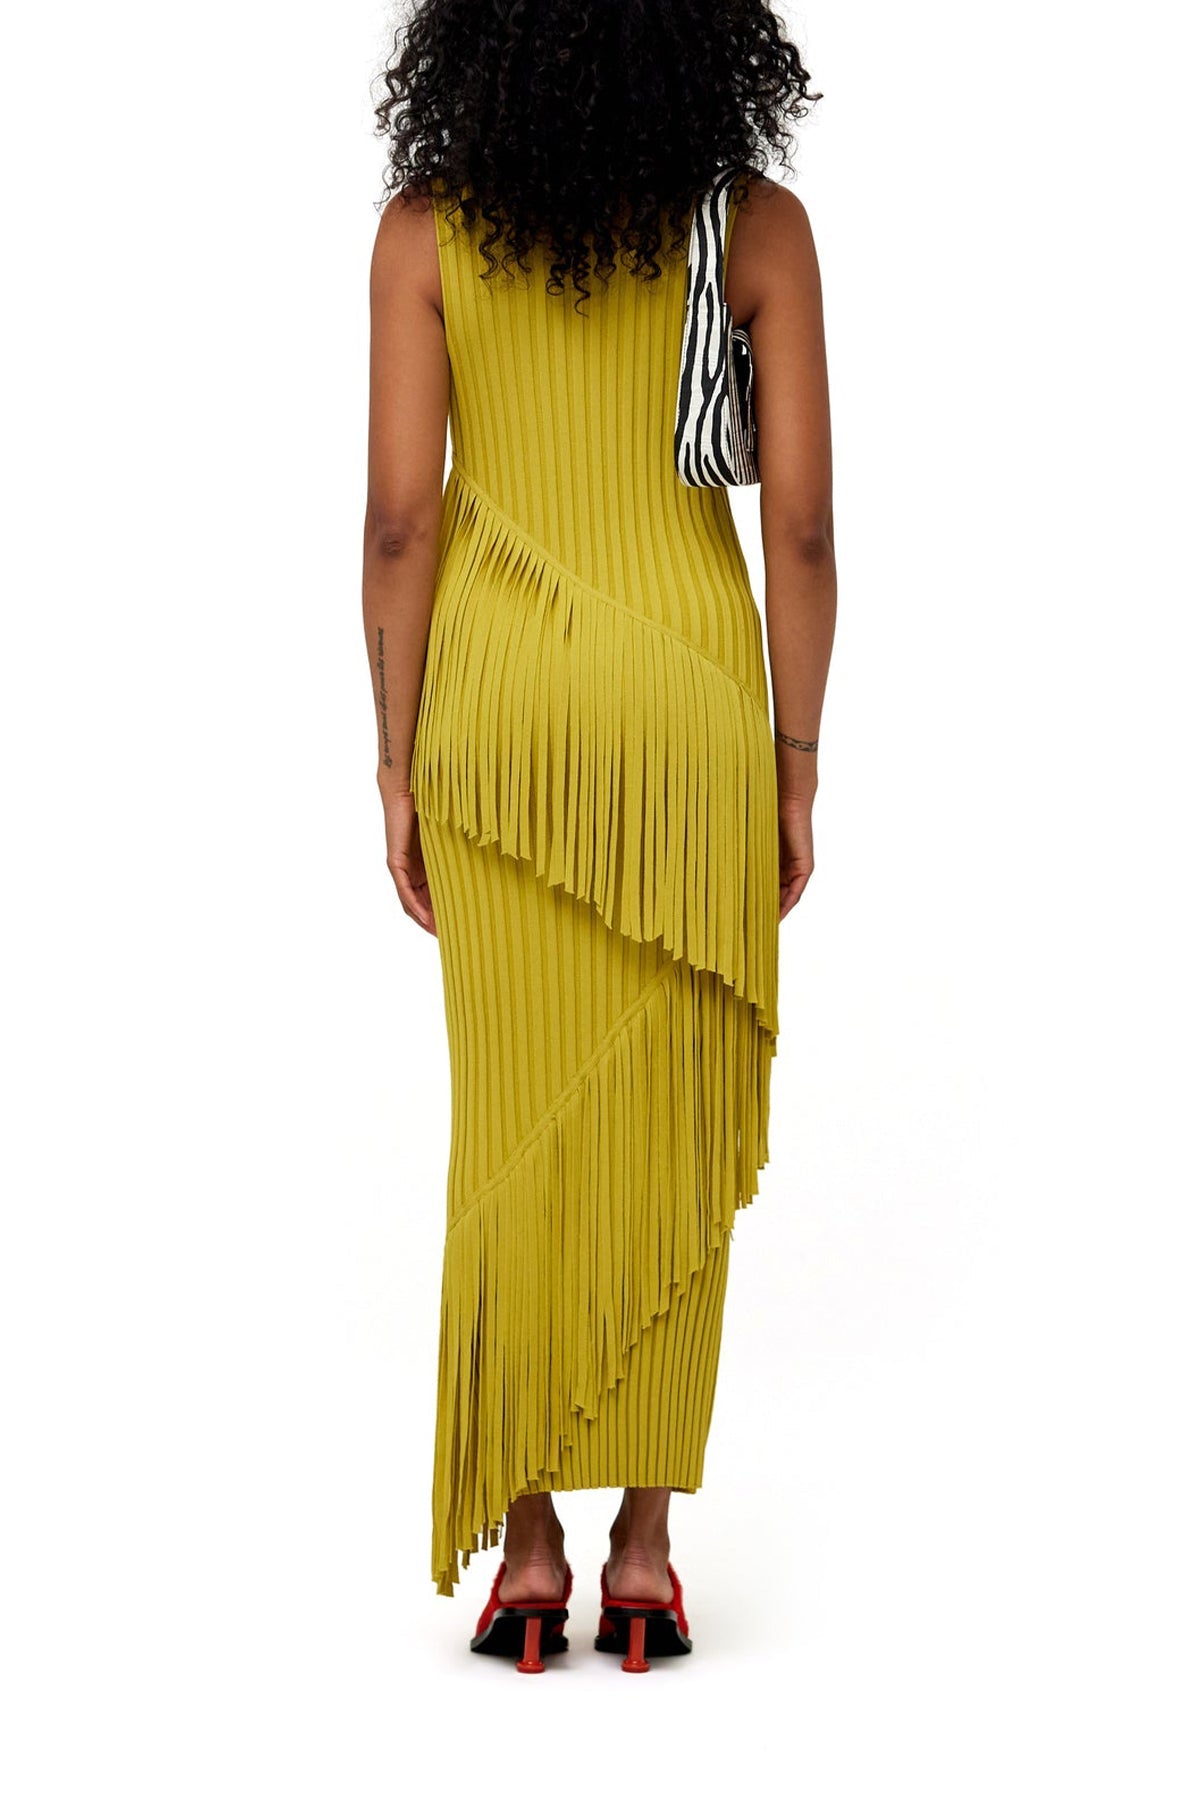 Spiral Maxi Dress in Kiwi - shop-olivia.com